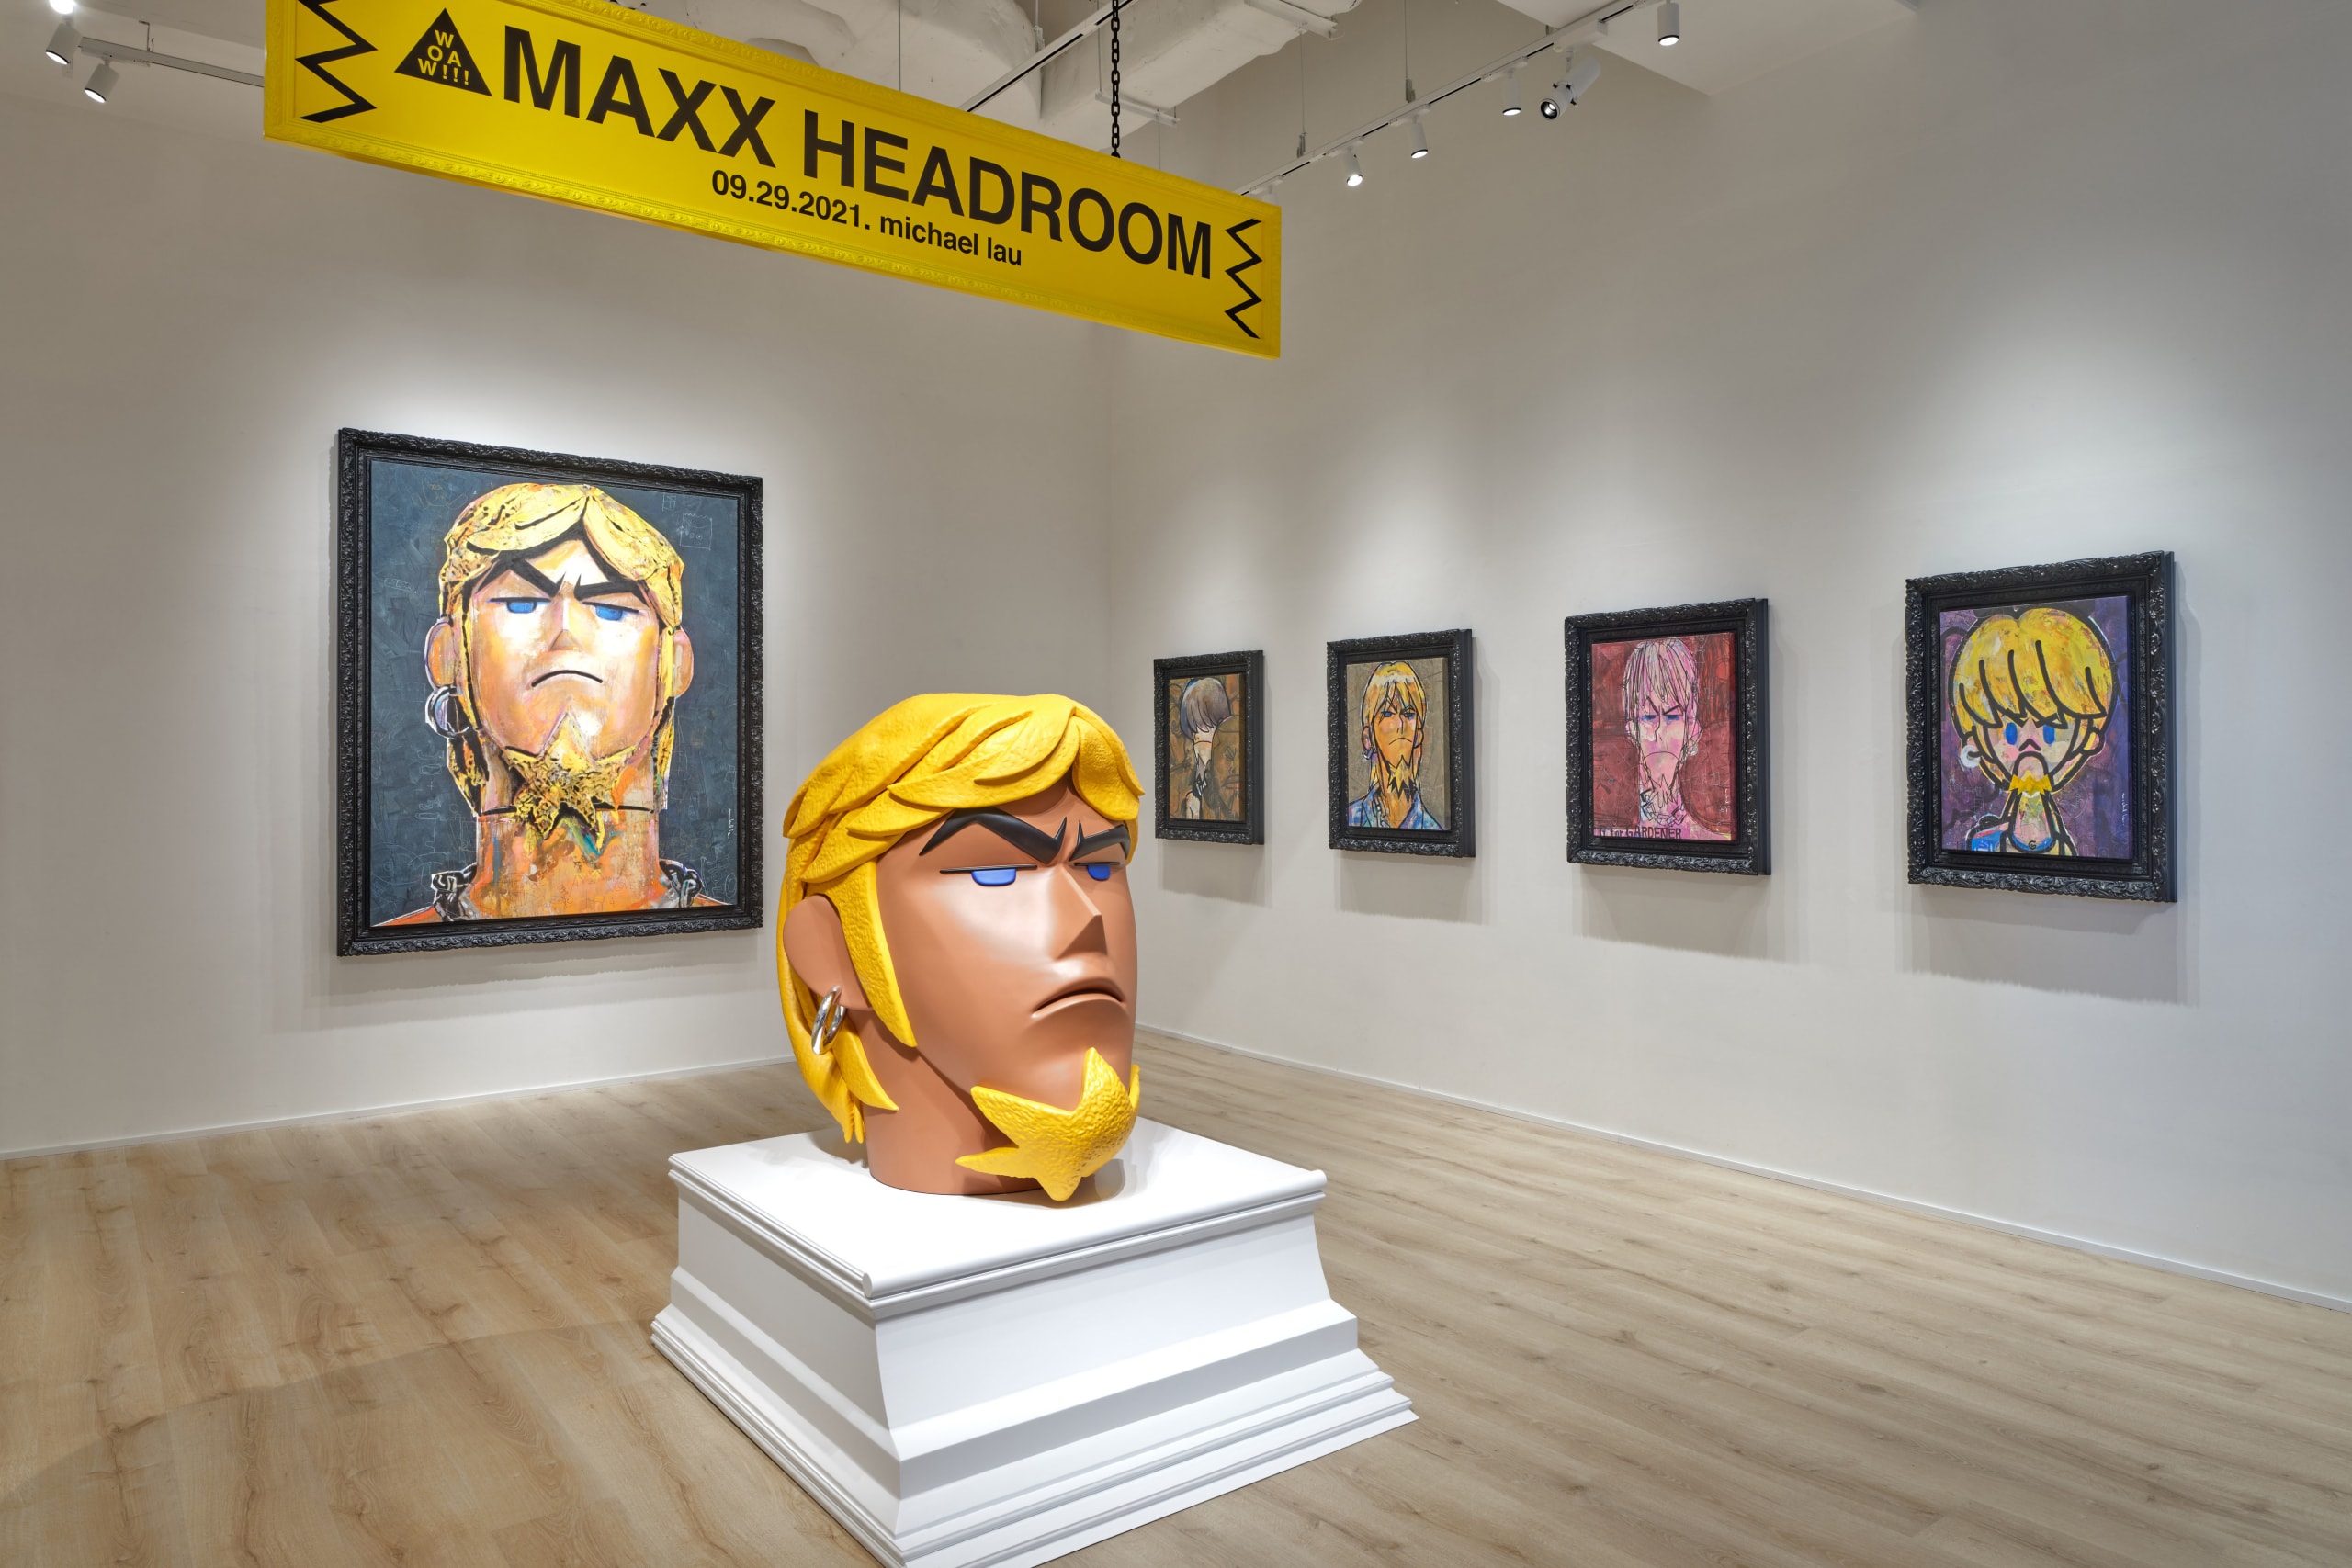 走进 Michael Lau 全新个展「MAXX HEADROOM」@ Woaw Gallery